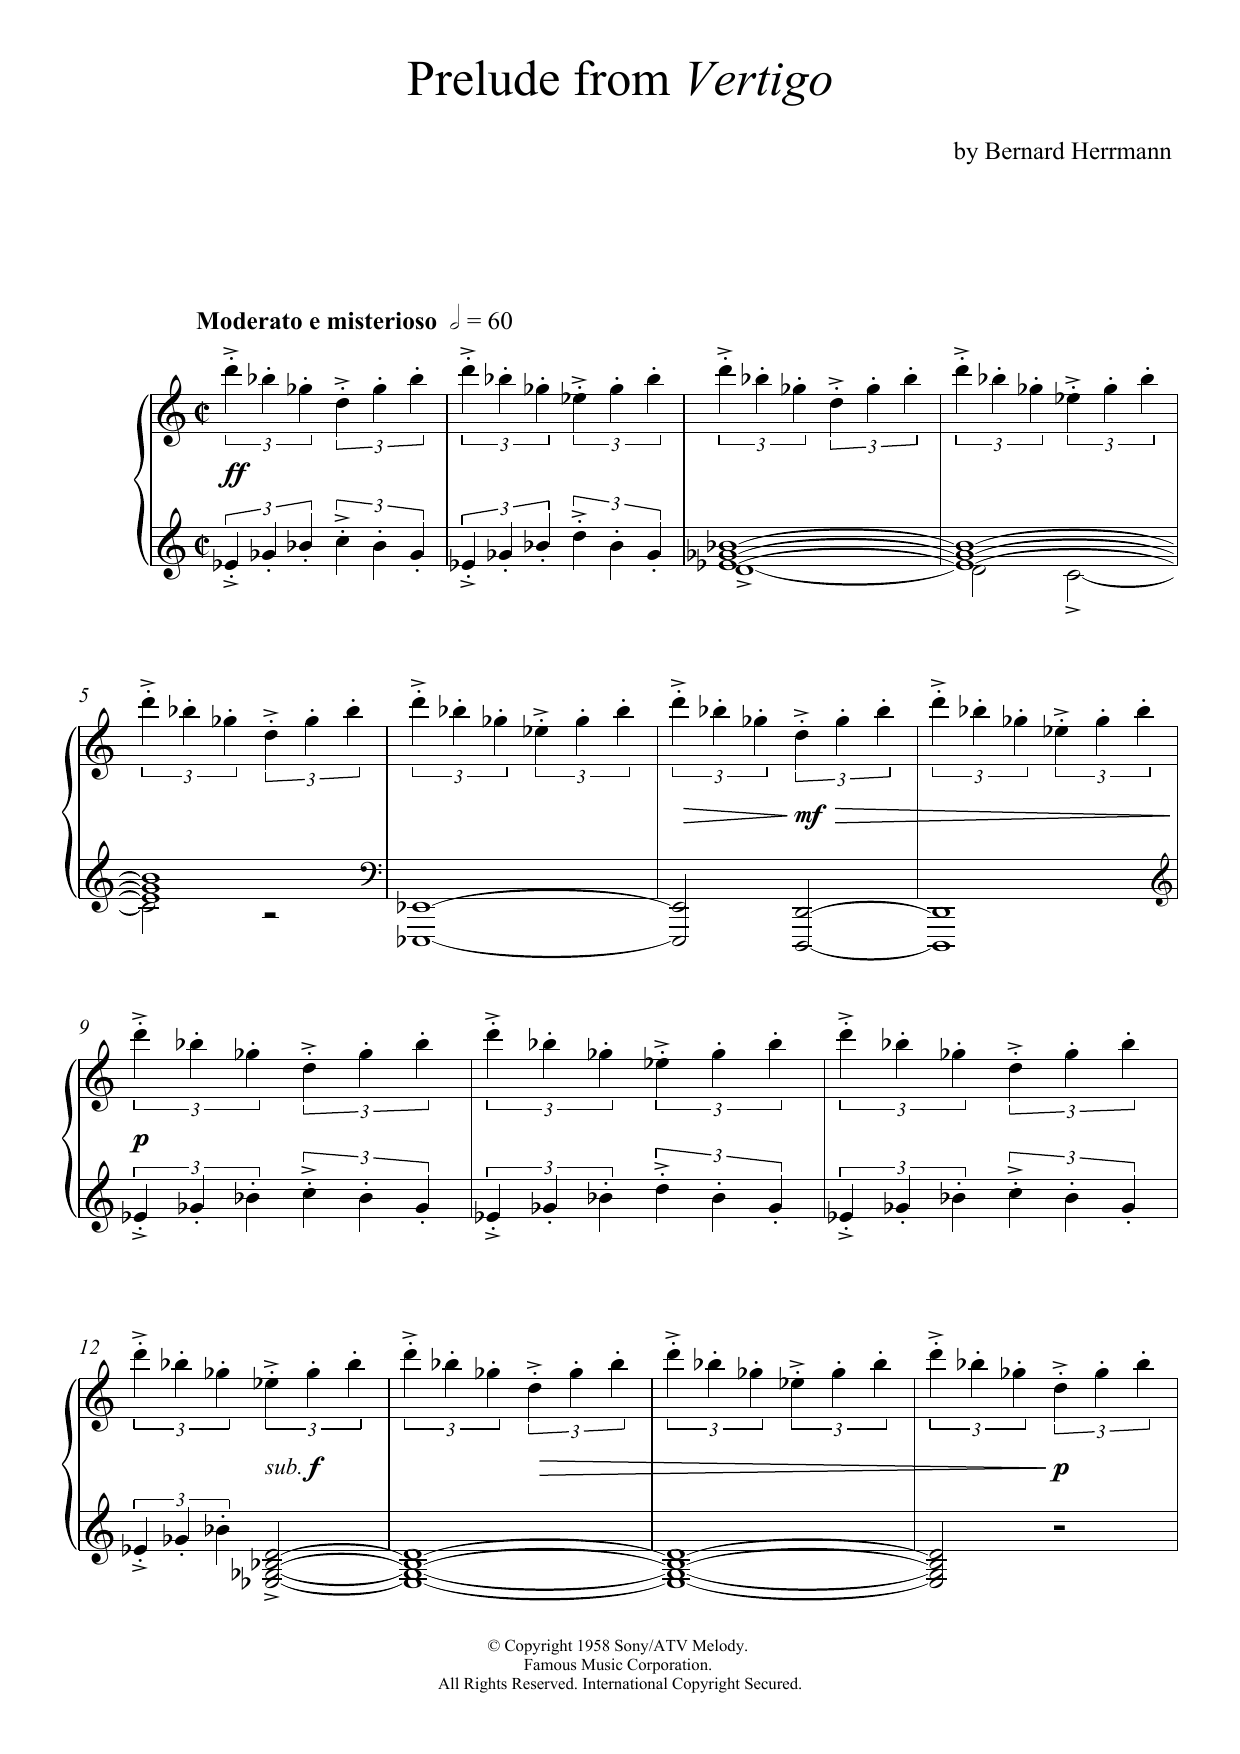 Bernard Herrmann Prelude From Vertigo Sheet Music Notes & Chords for Piano - Download or Print PDF